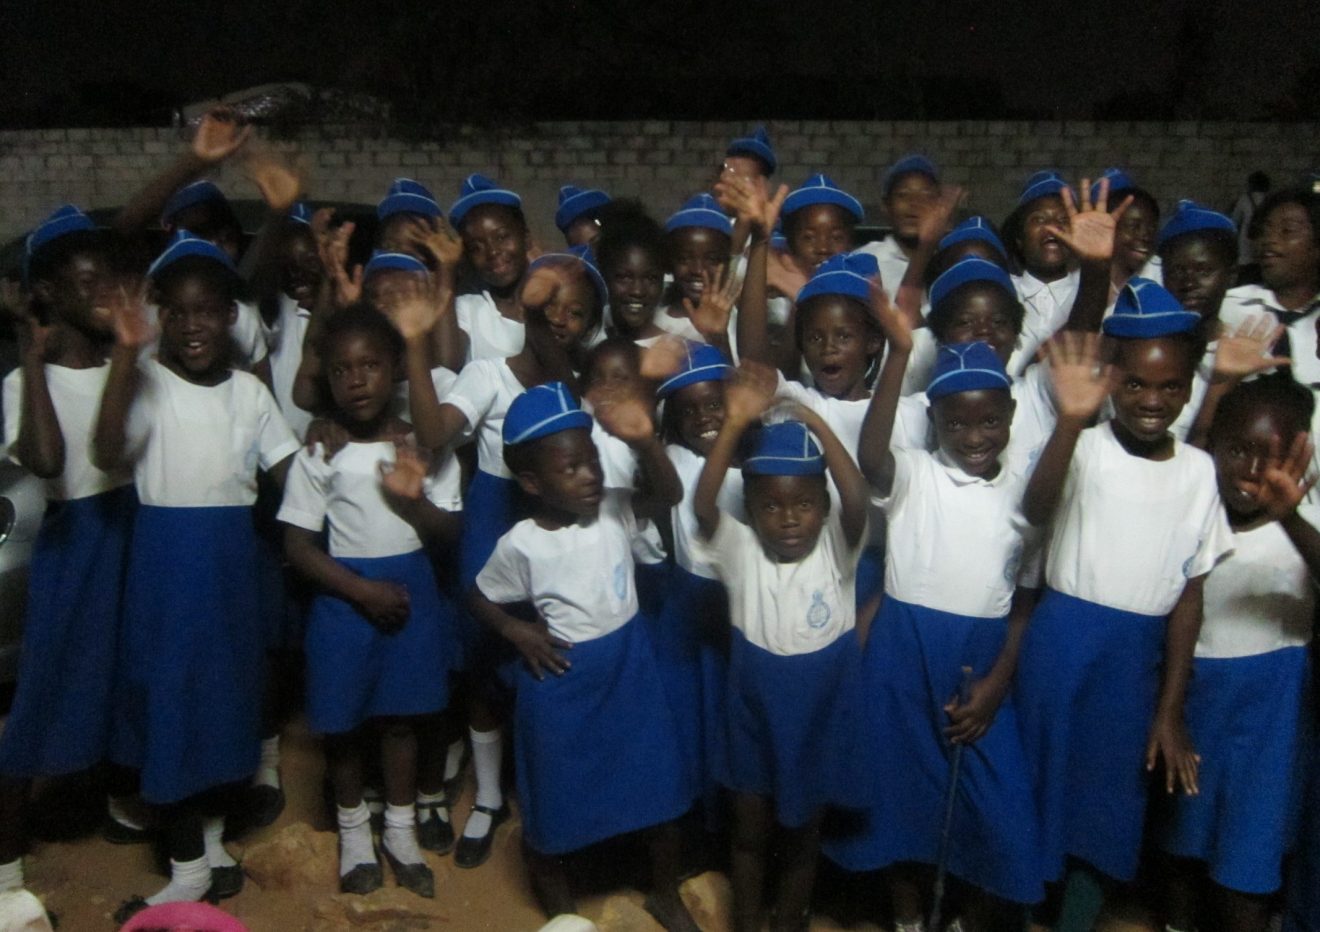 Children in Zambia - sending prayers